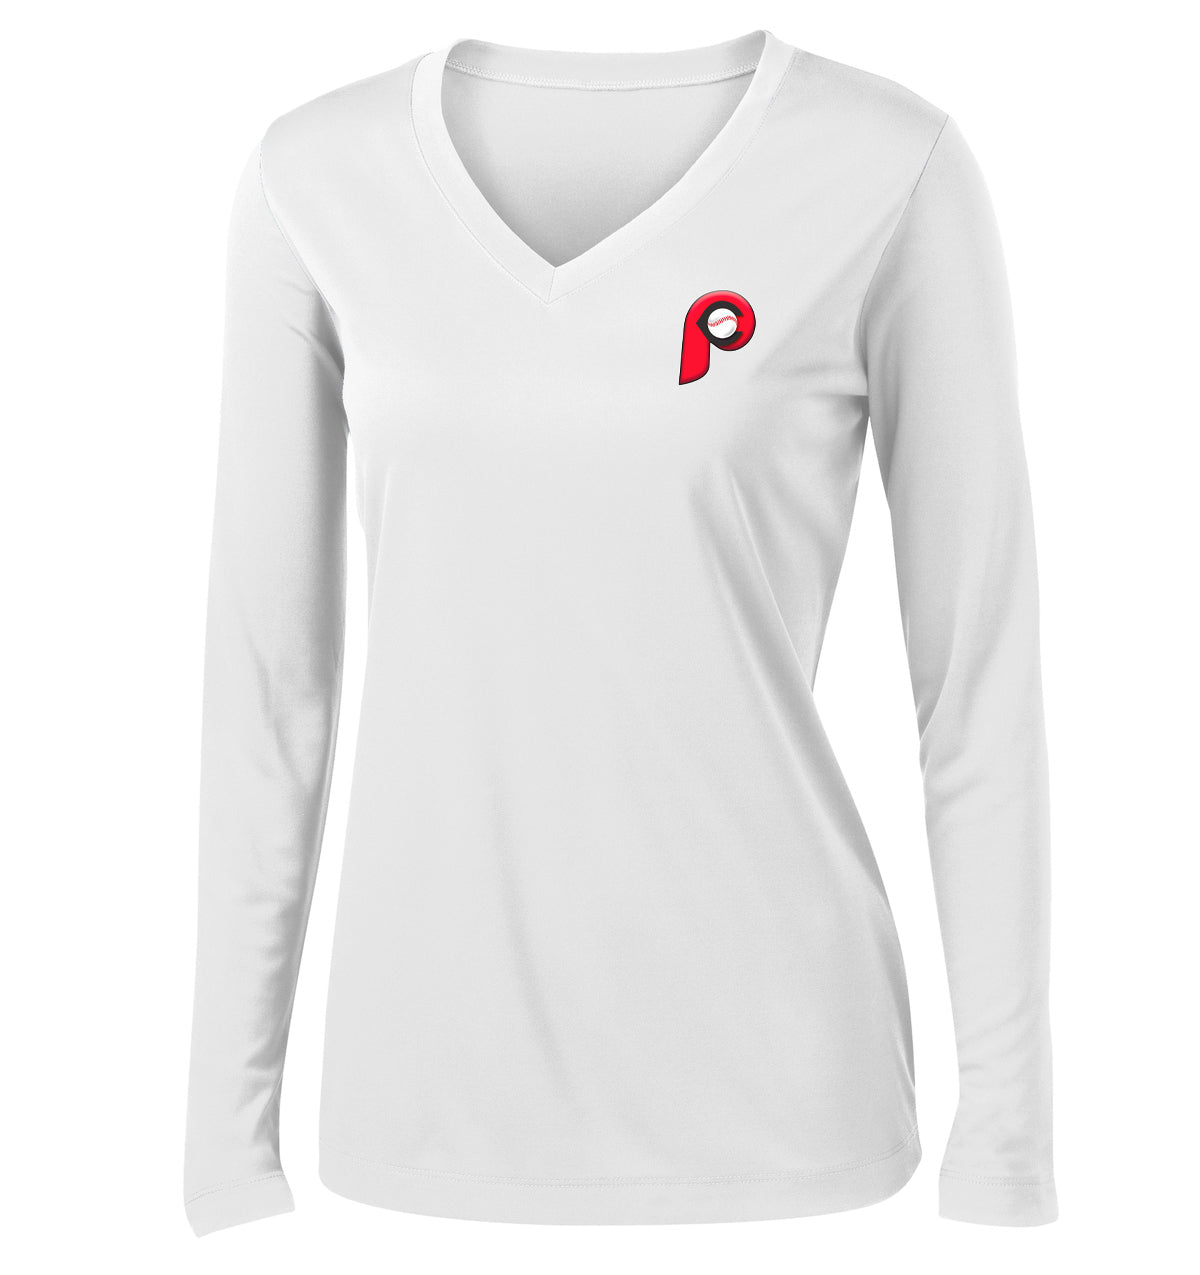 Player's Choice Academy Baseball Women's Long Sleeve Performance Shirt